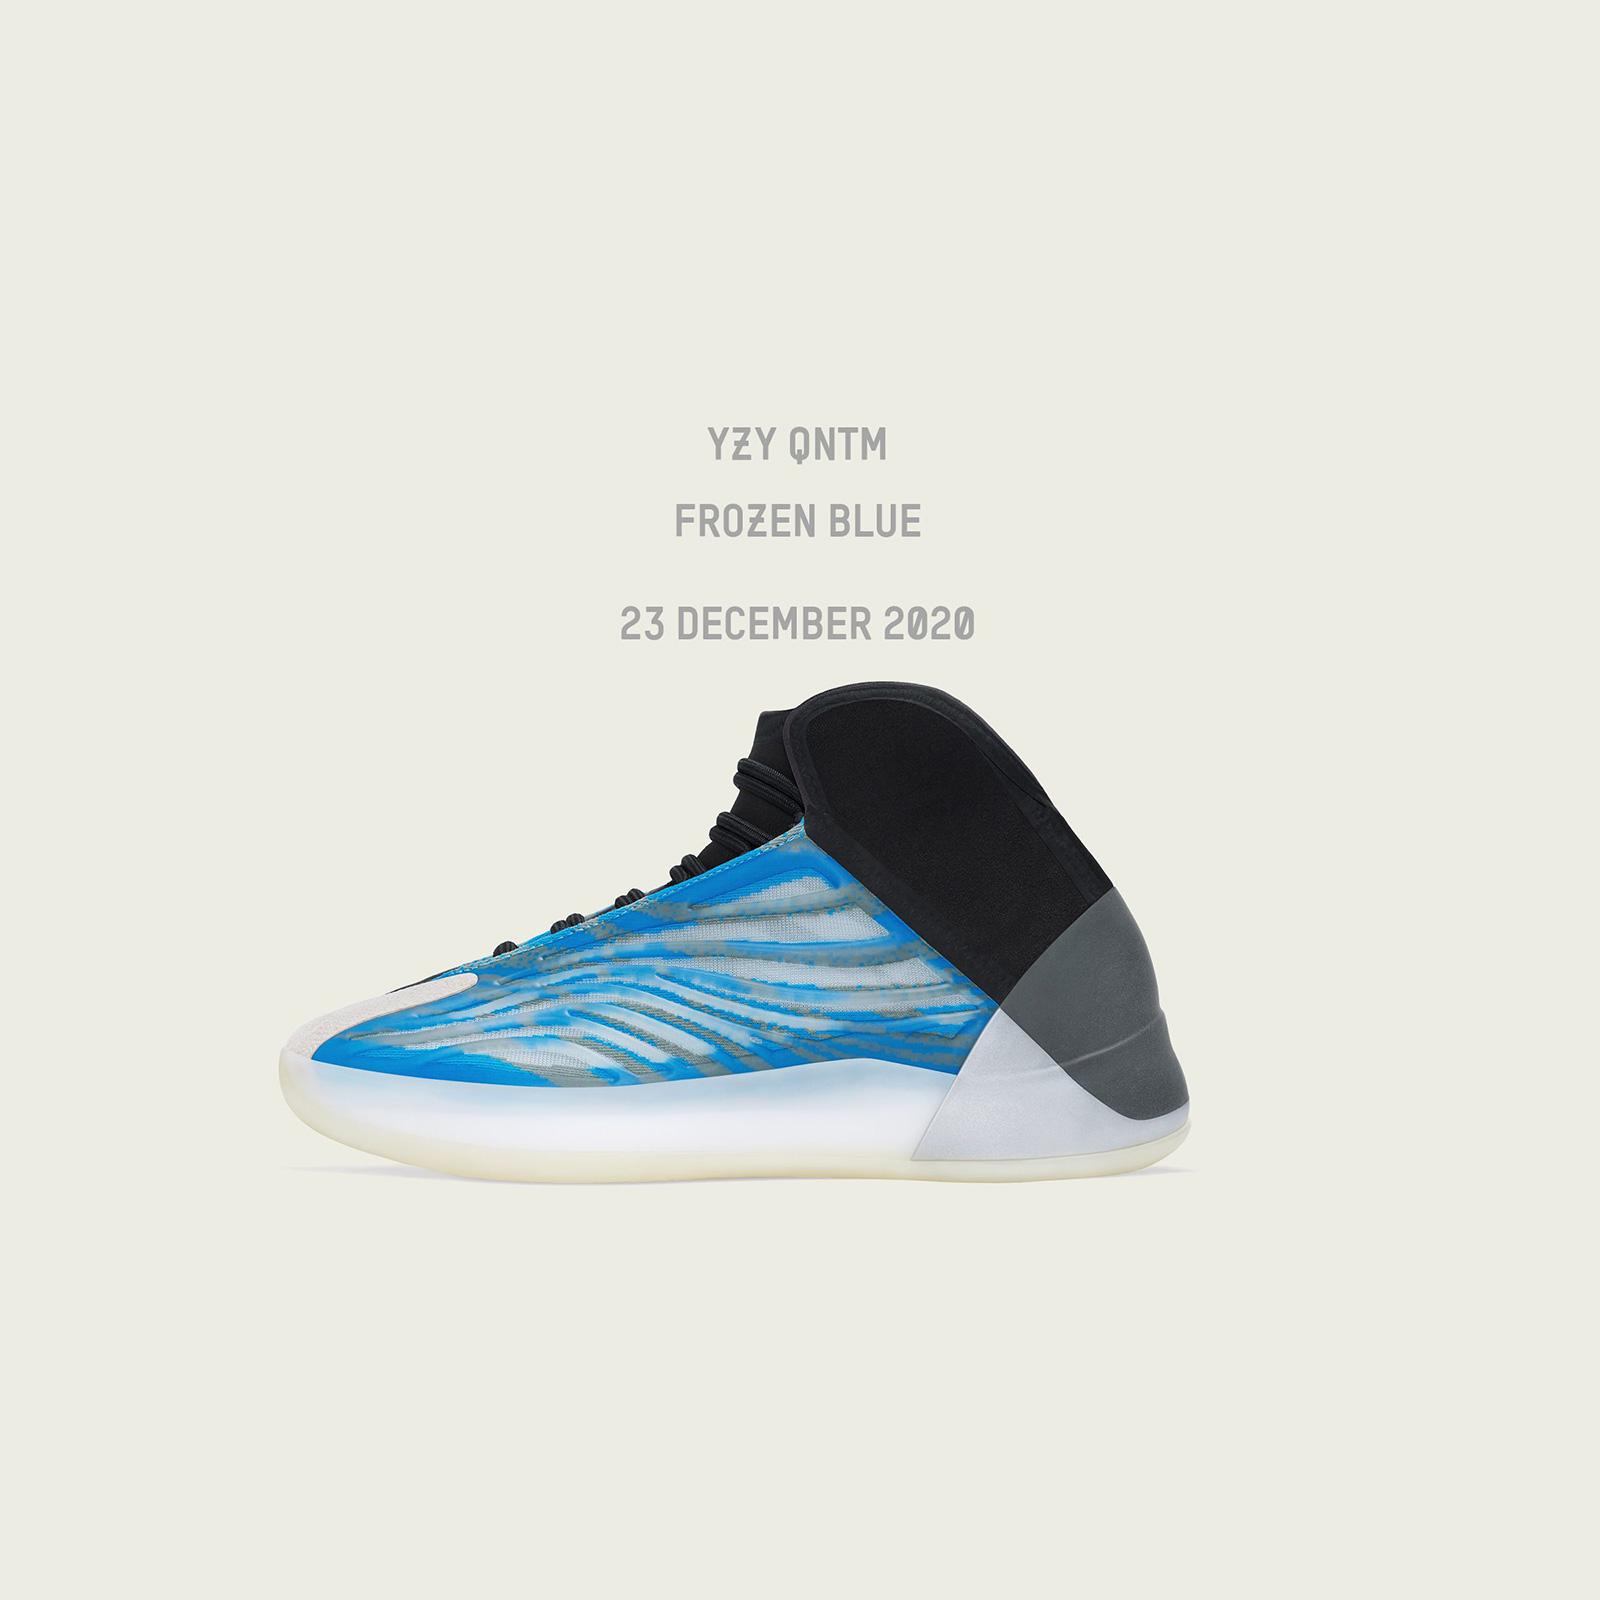 adidas YEEZY QNTM “FROZEN BLUE” “KANYE WEST” | mita sneakers Draw